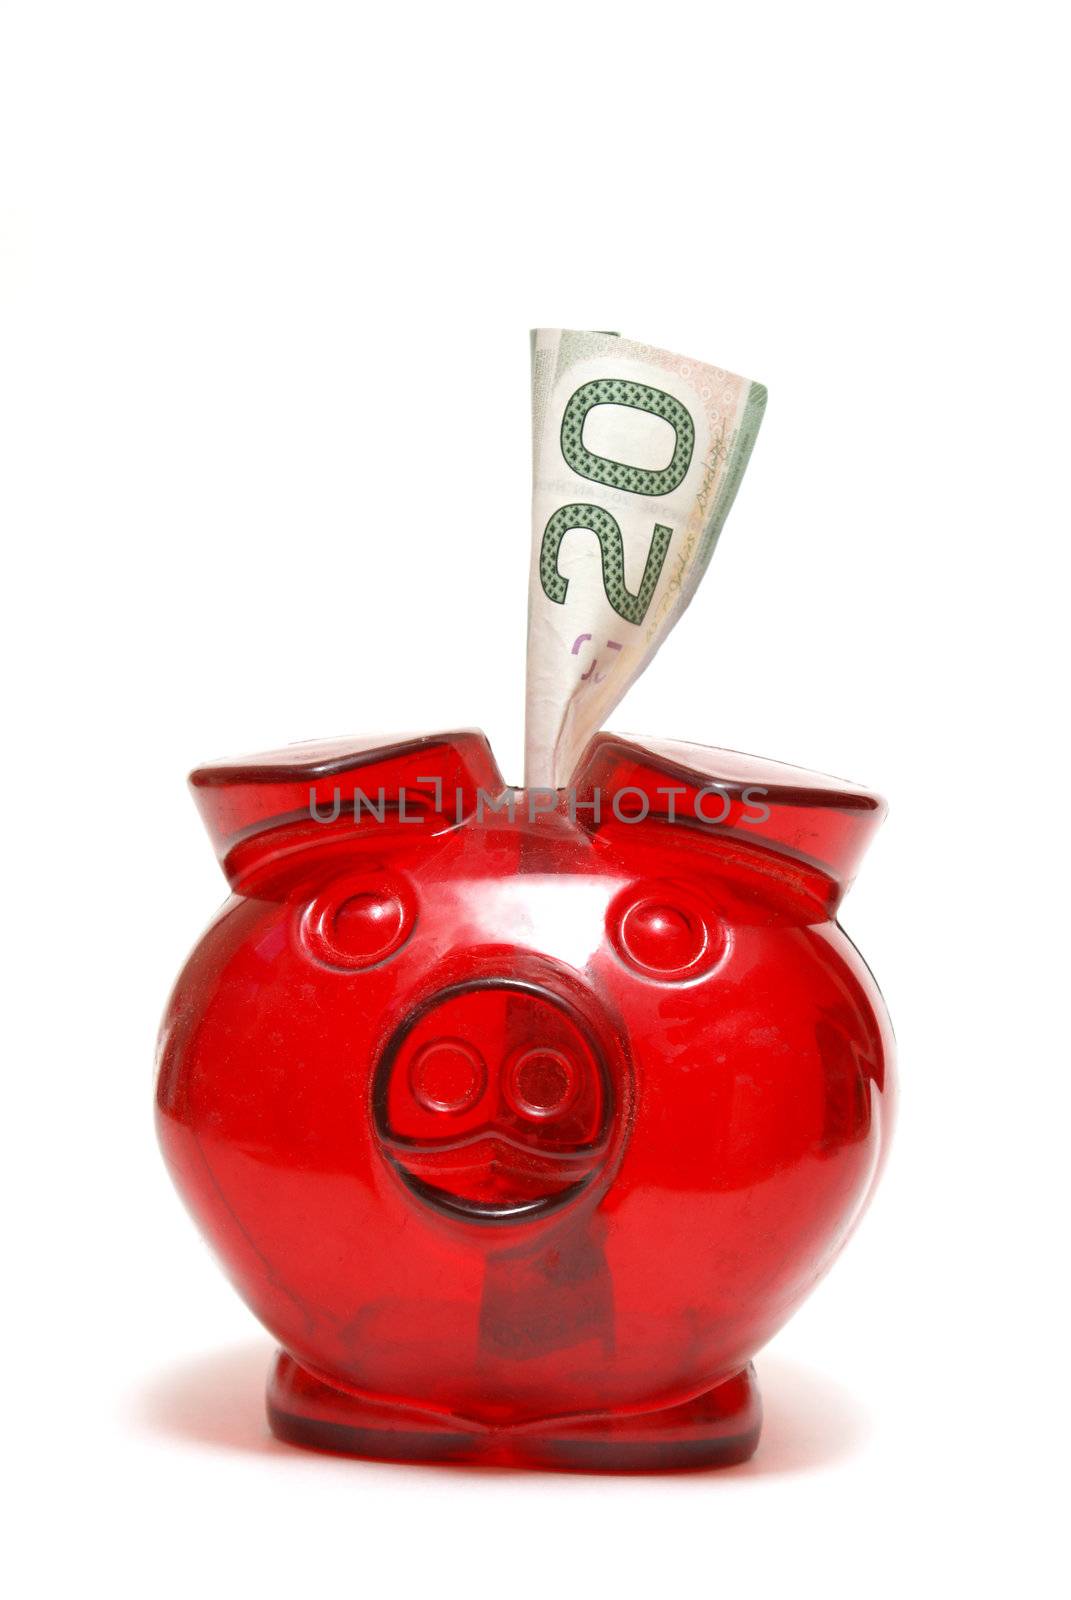 A red piggy bank with a twenty dollar bill for the money saving mind set.